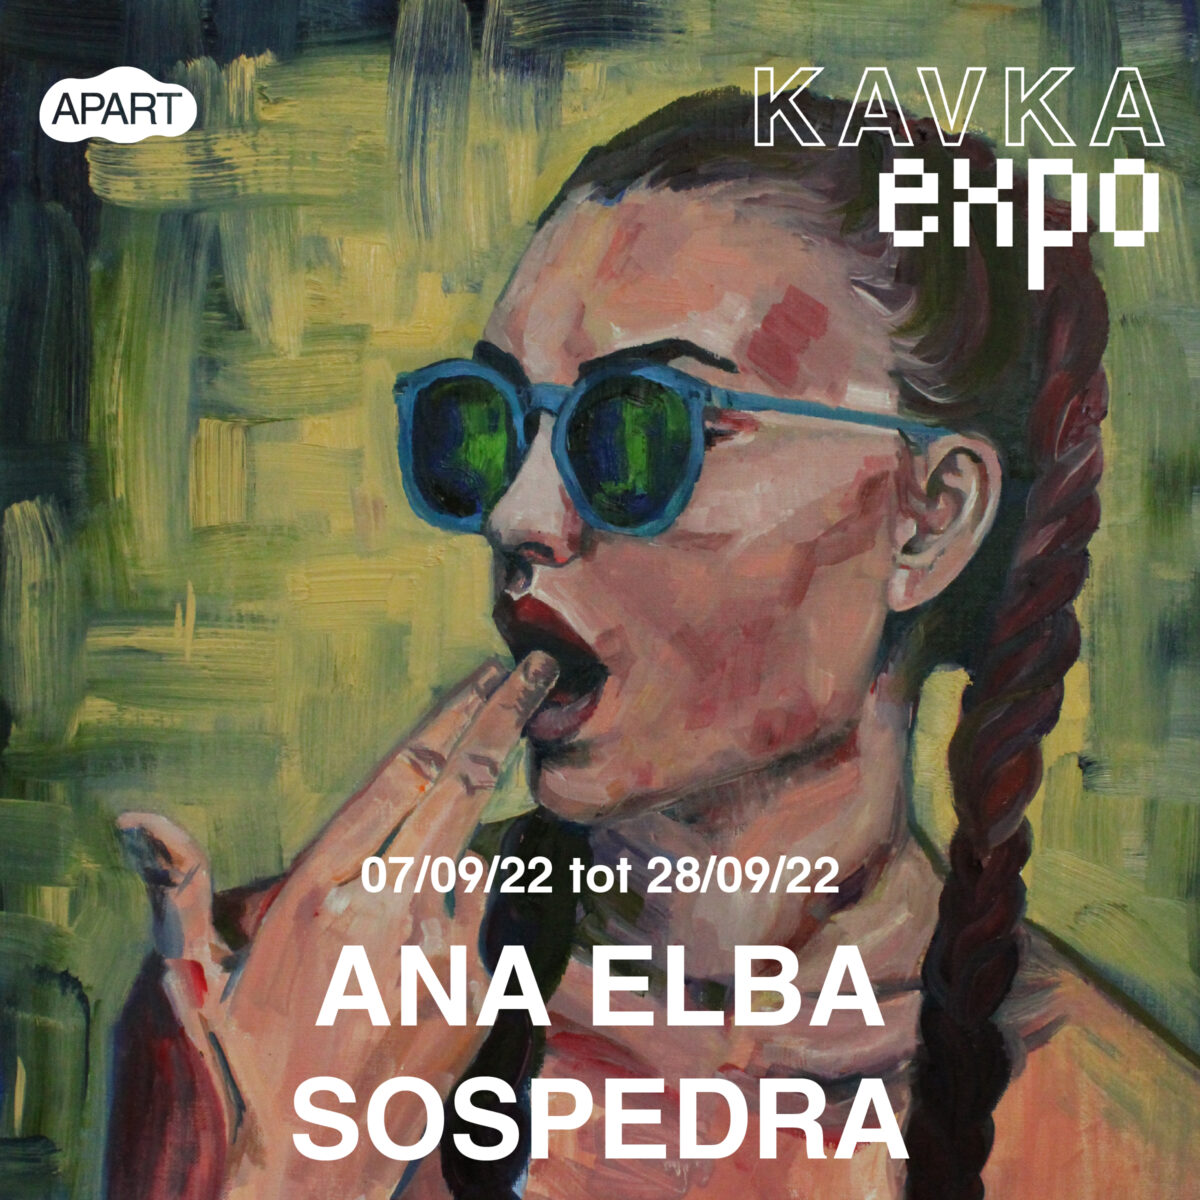 KAVKA EXPO – ANA ELBA SOSPEDRA – Lipstick is fine but not needed